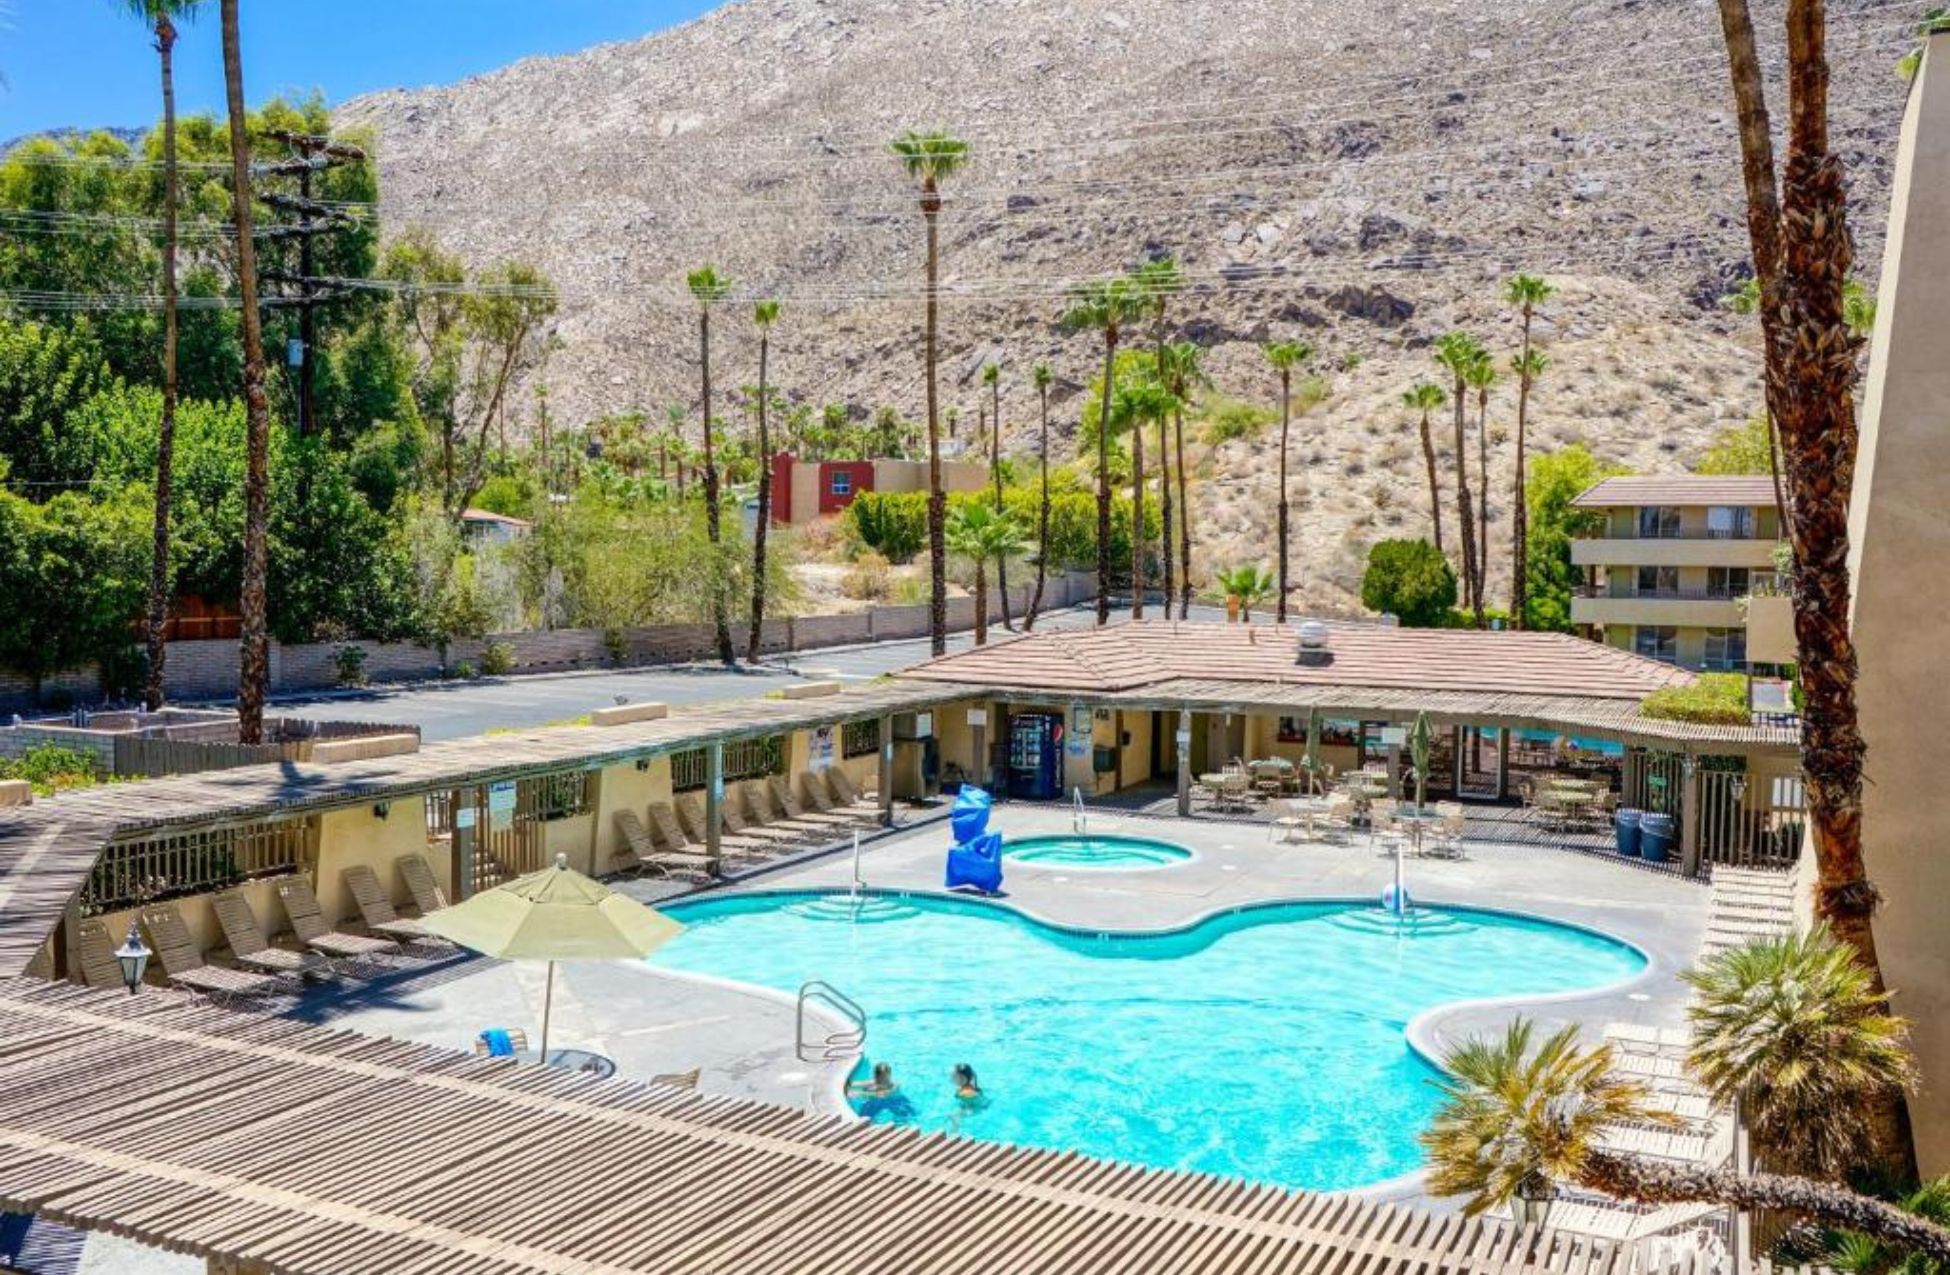 Vagabond Motor Hotel - Best Hotels In Palm Springs